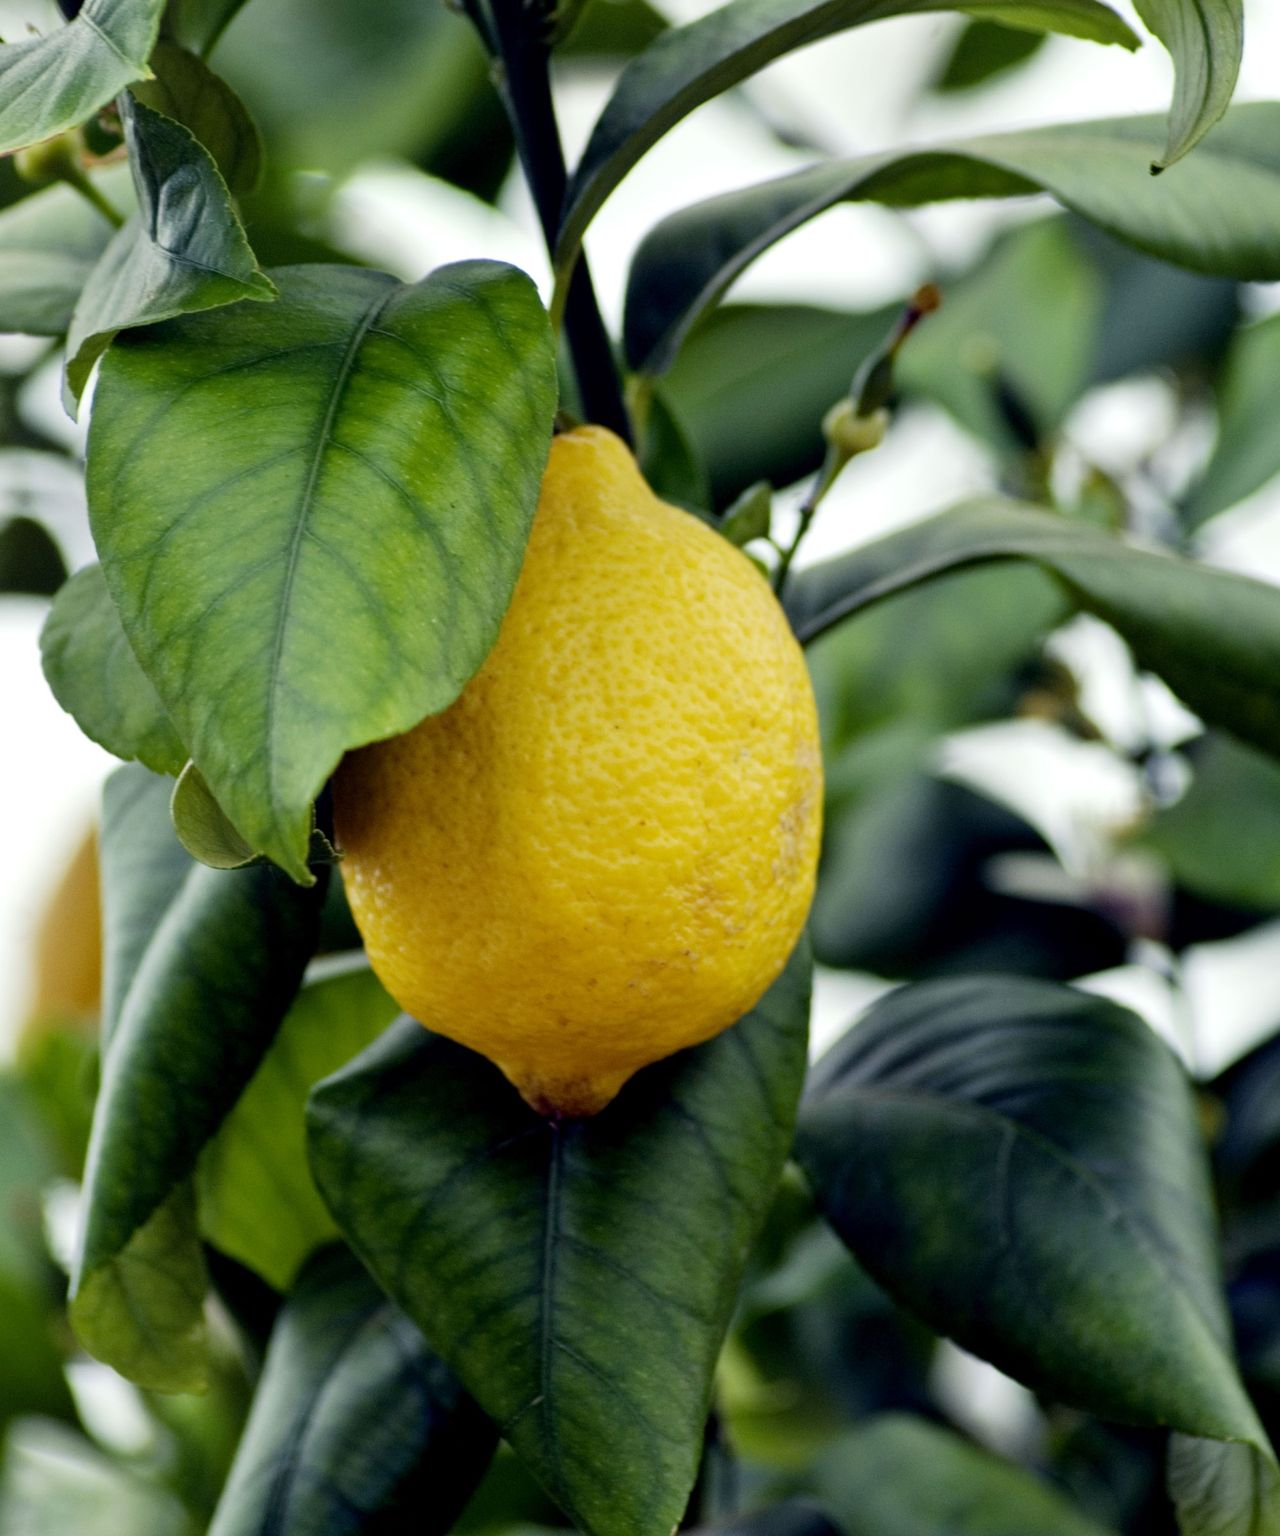 Expert tips on how to grow a lemon tree | Gardeningetc